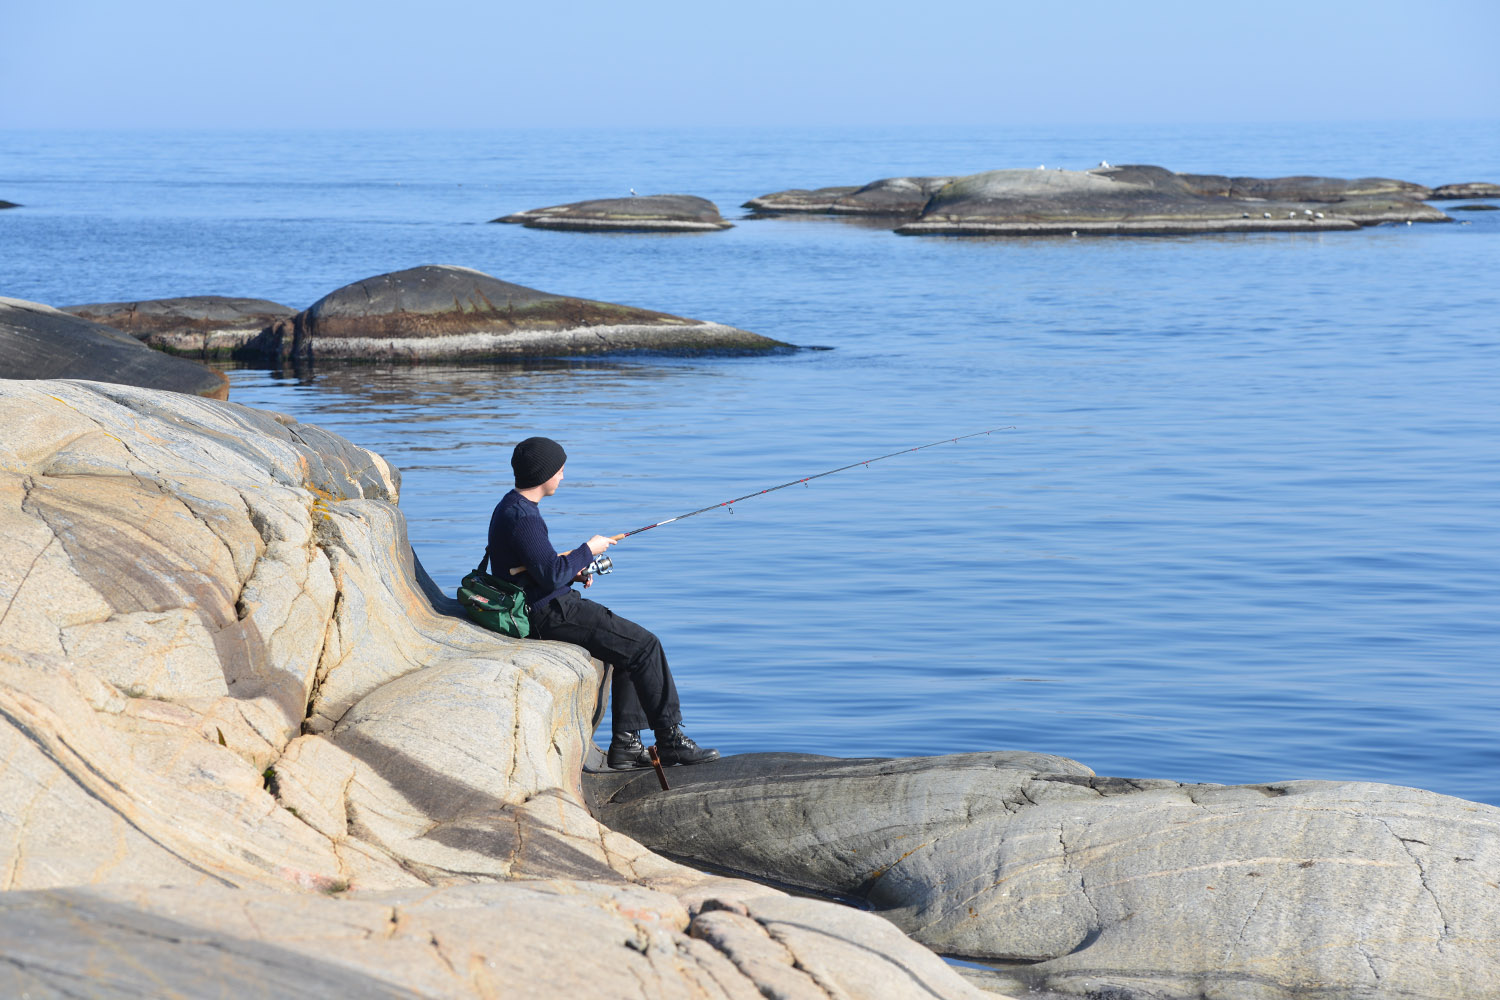 Boy fishing from rocky shore.